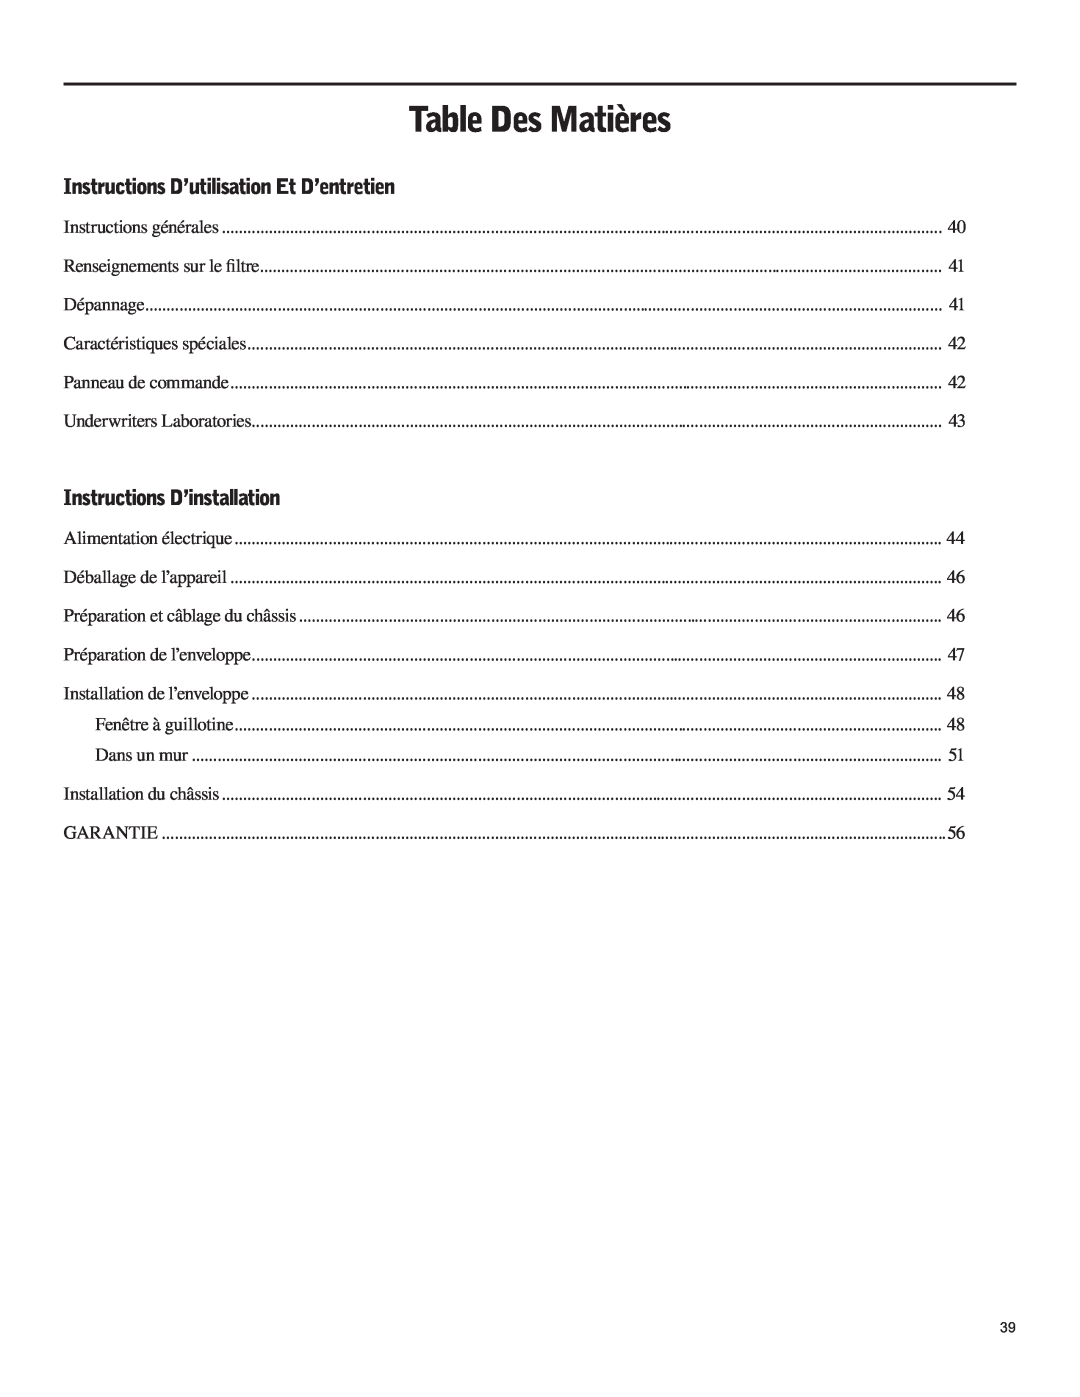 Friedrich SH15 operation manual Table Des Matières, Instructions D’Installation 